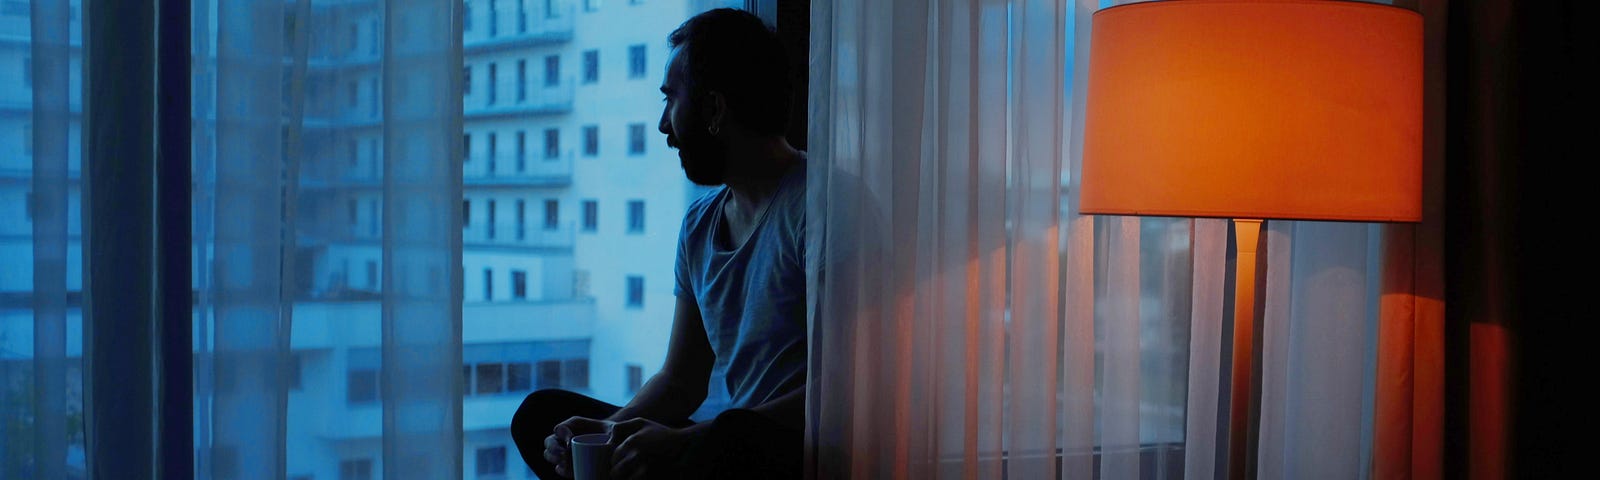 man sitting on window ledge in darkened hotel room with lamp